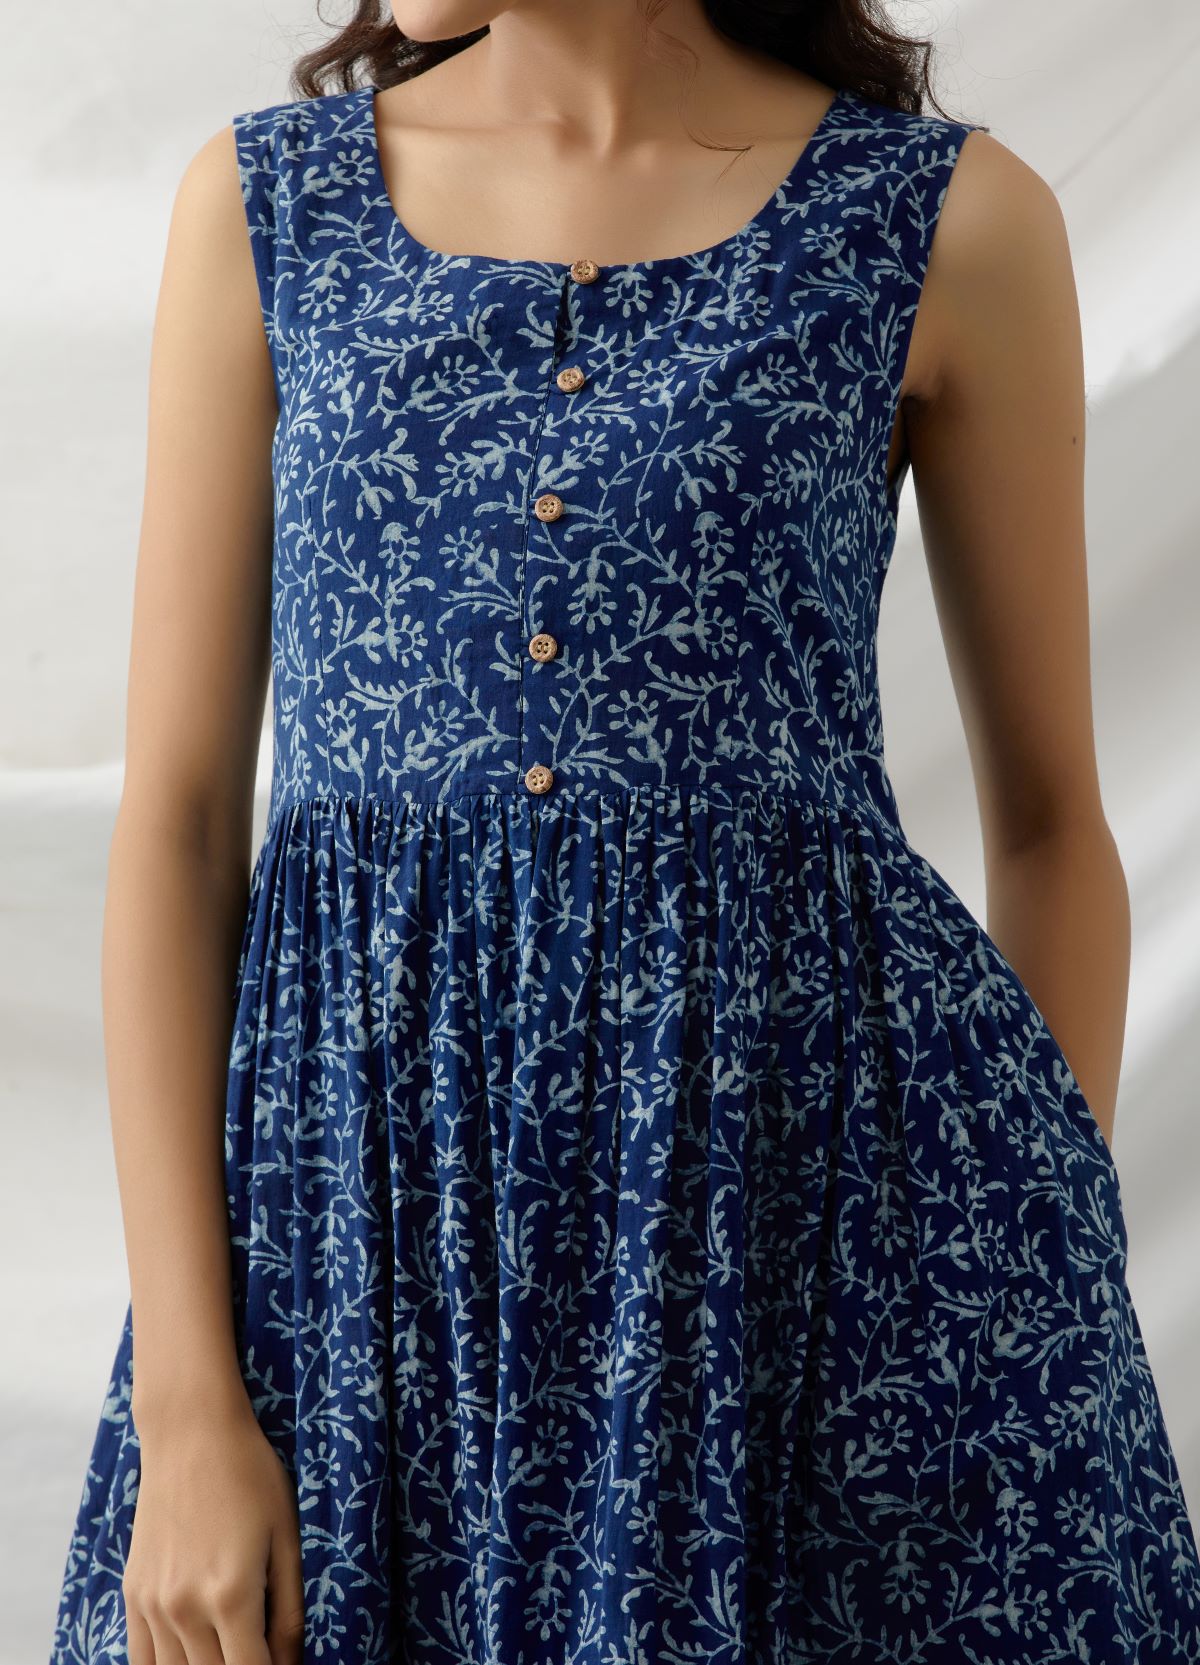 Bagh - Indigo floral print dress with contrasting back